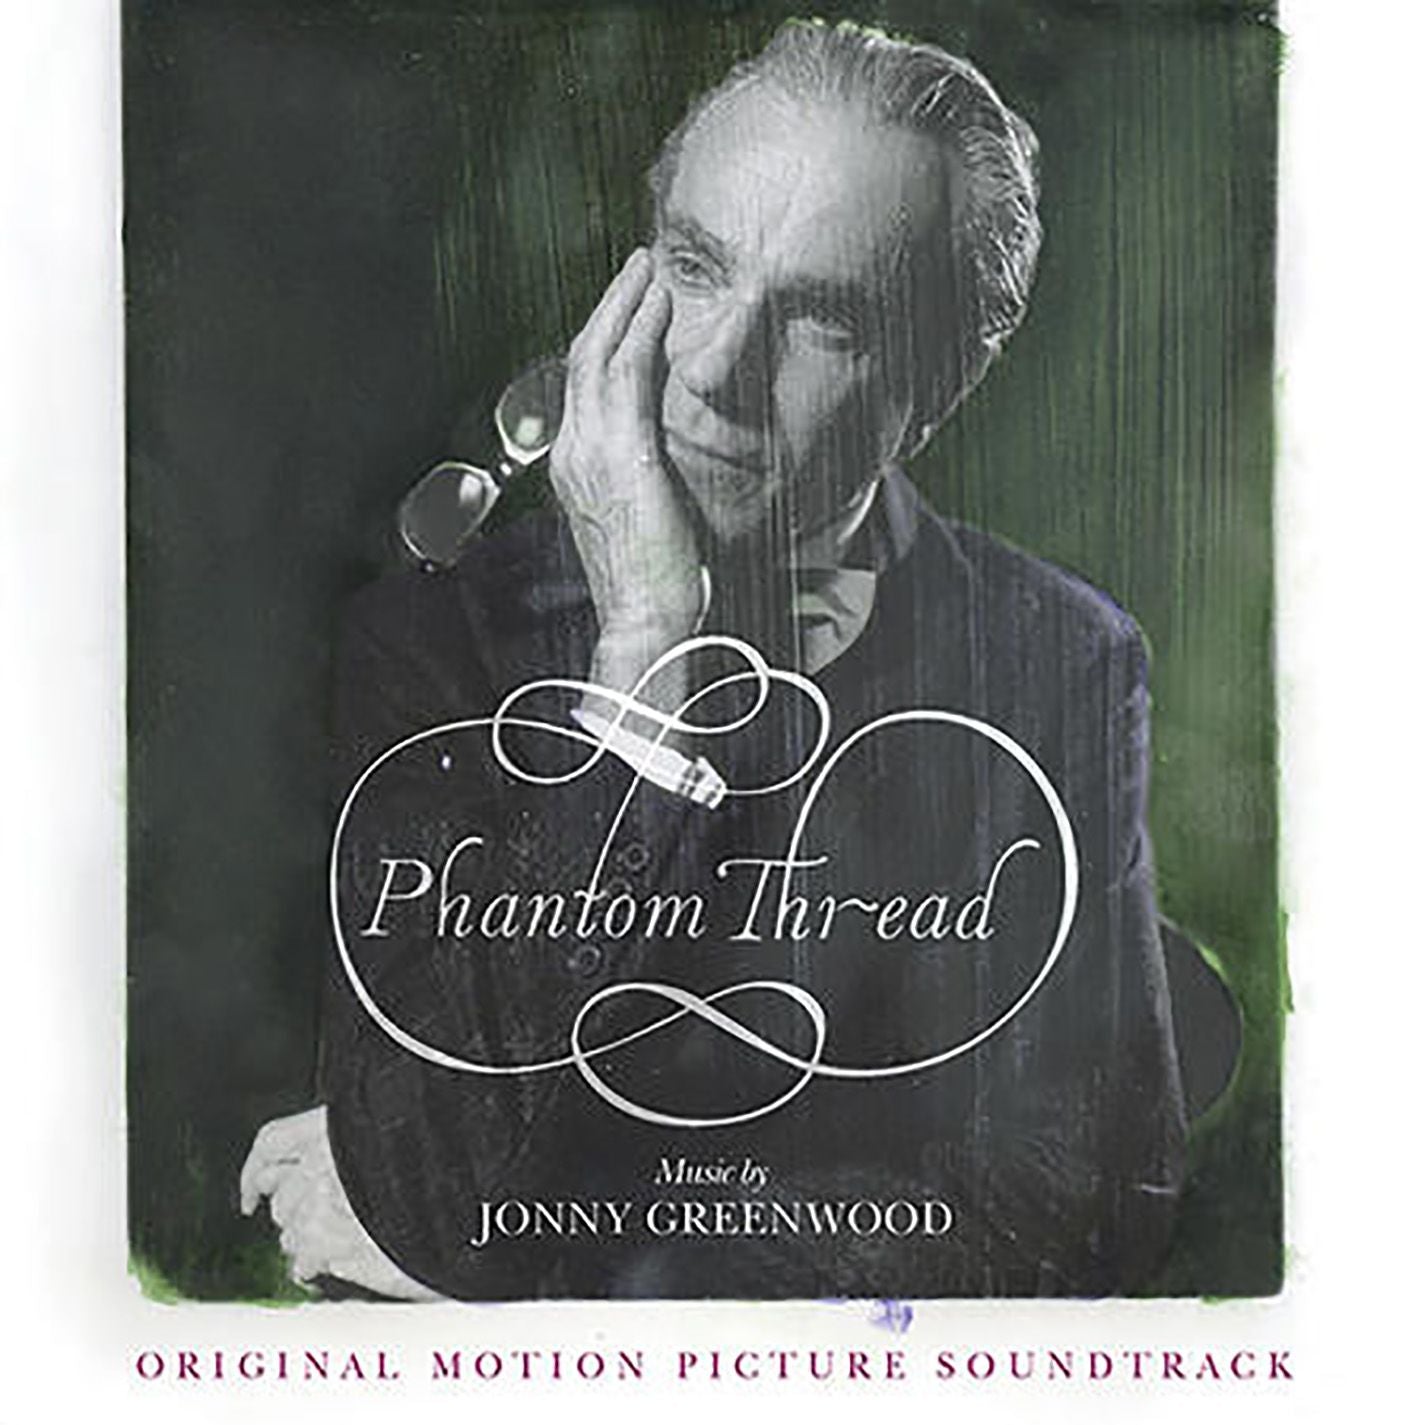 Jonny Greenwood - Phantom Thread - Original Motion Picture Soundtrack